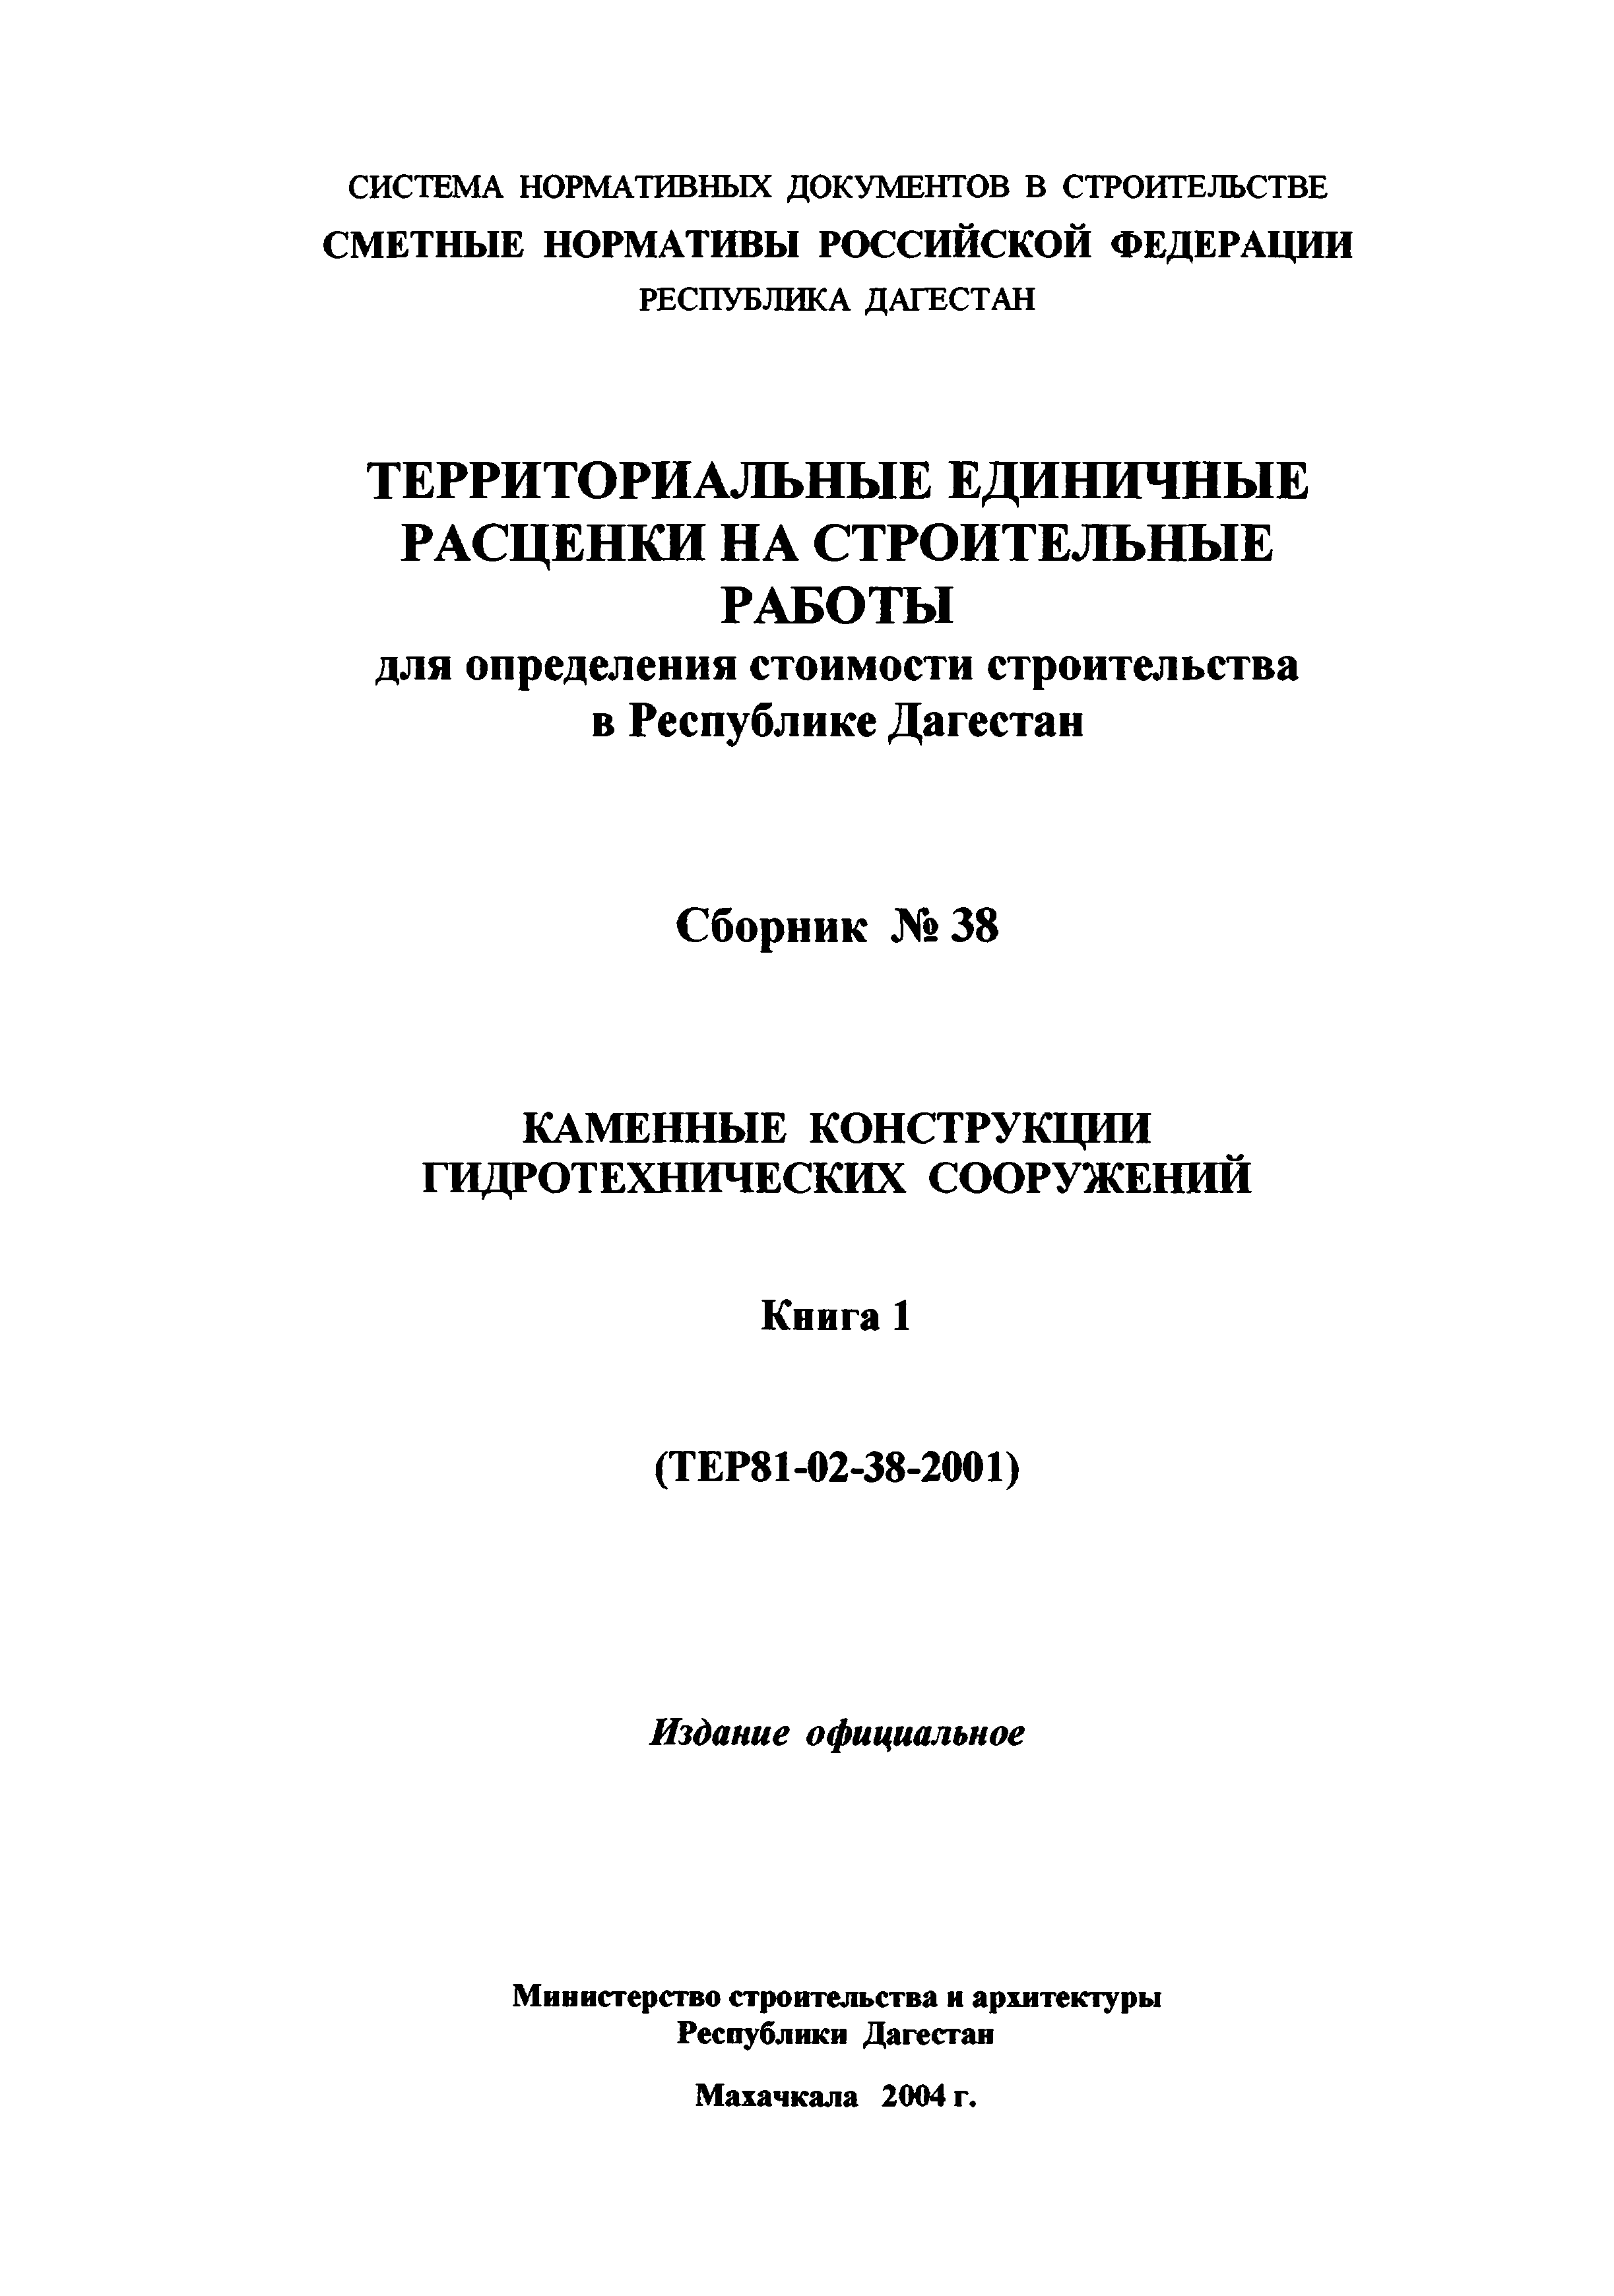 ТЕР Республика Дагестан 2001-38